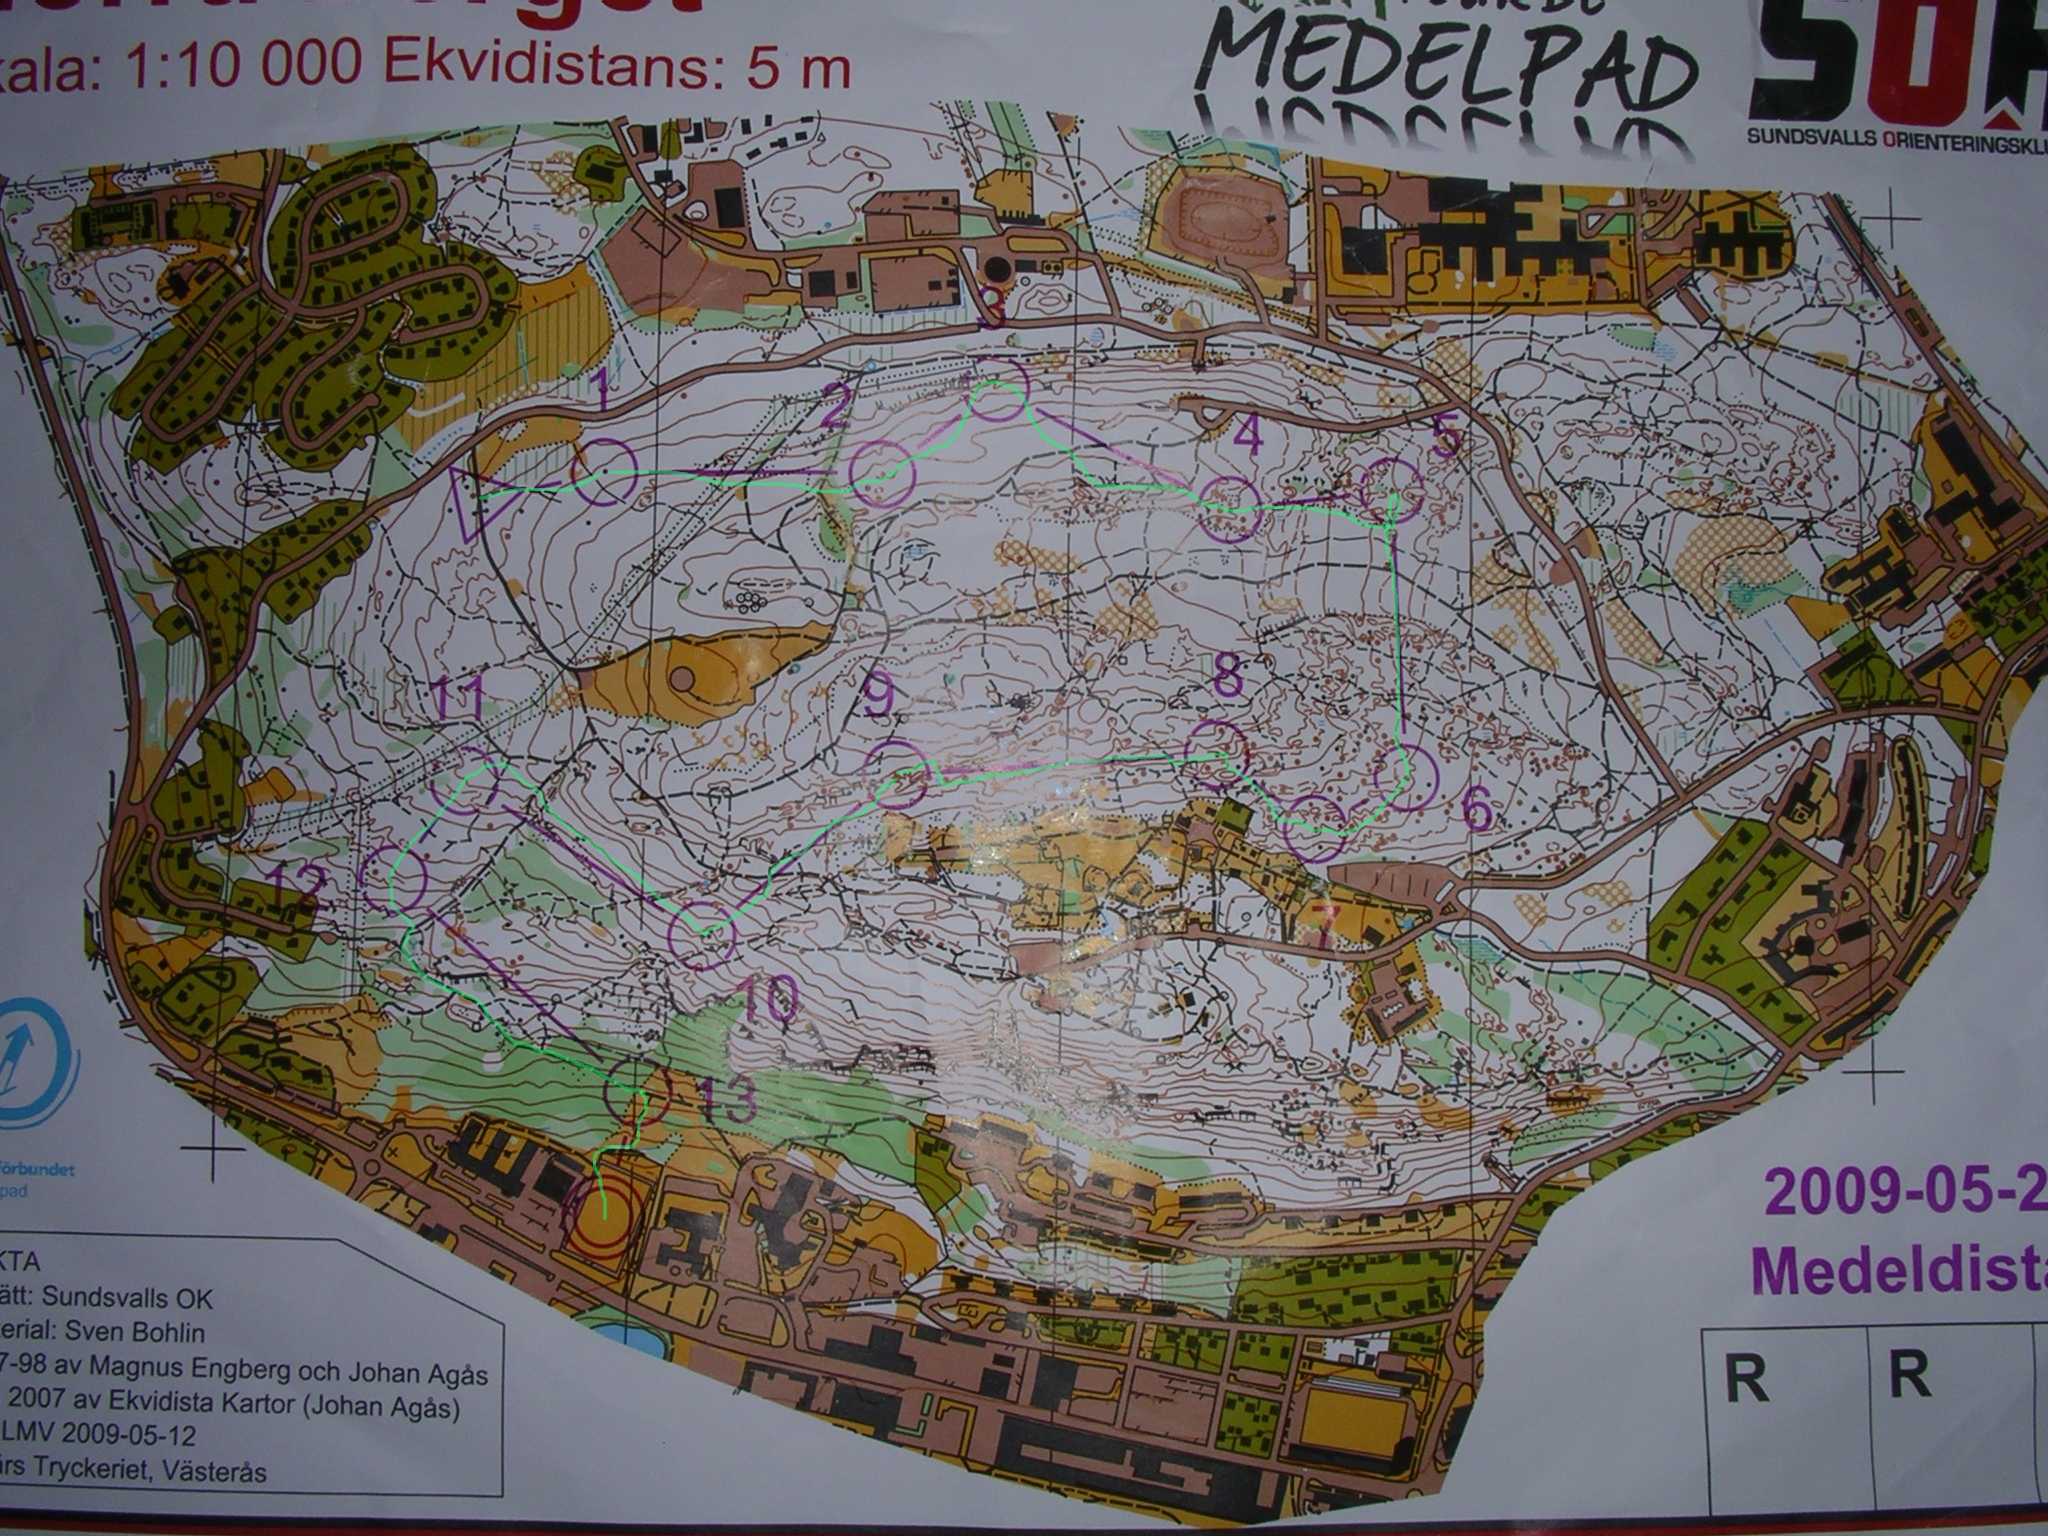 Tour de Medelpad - Sundsvallsträffen Medel (21-05-2009)